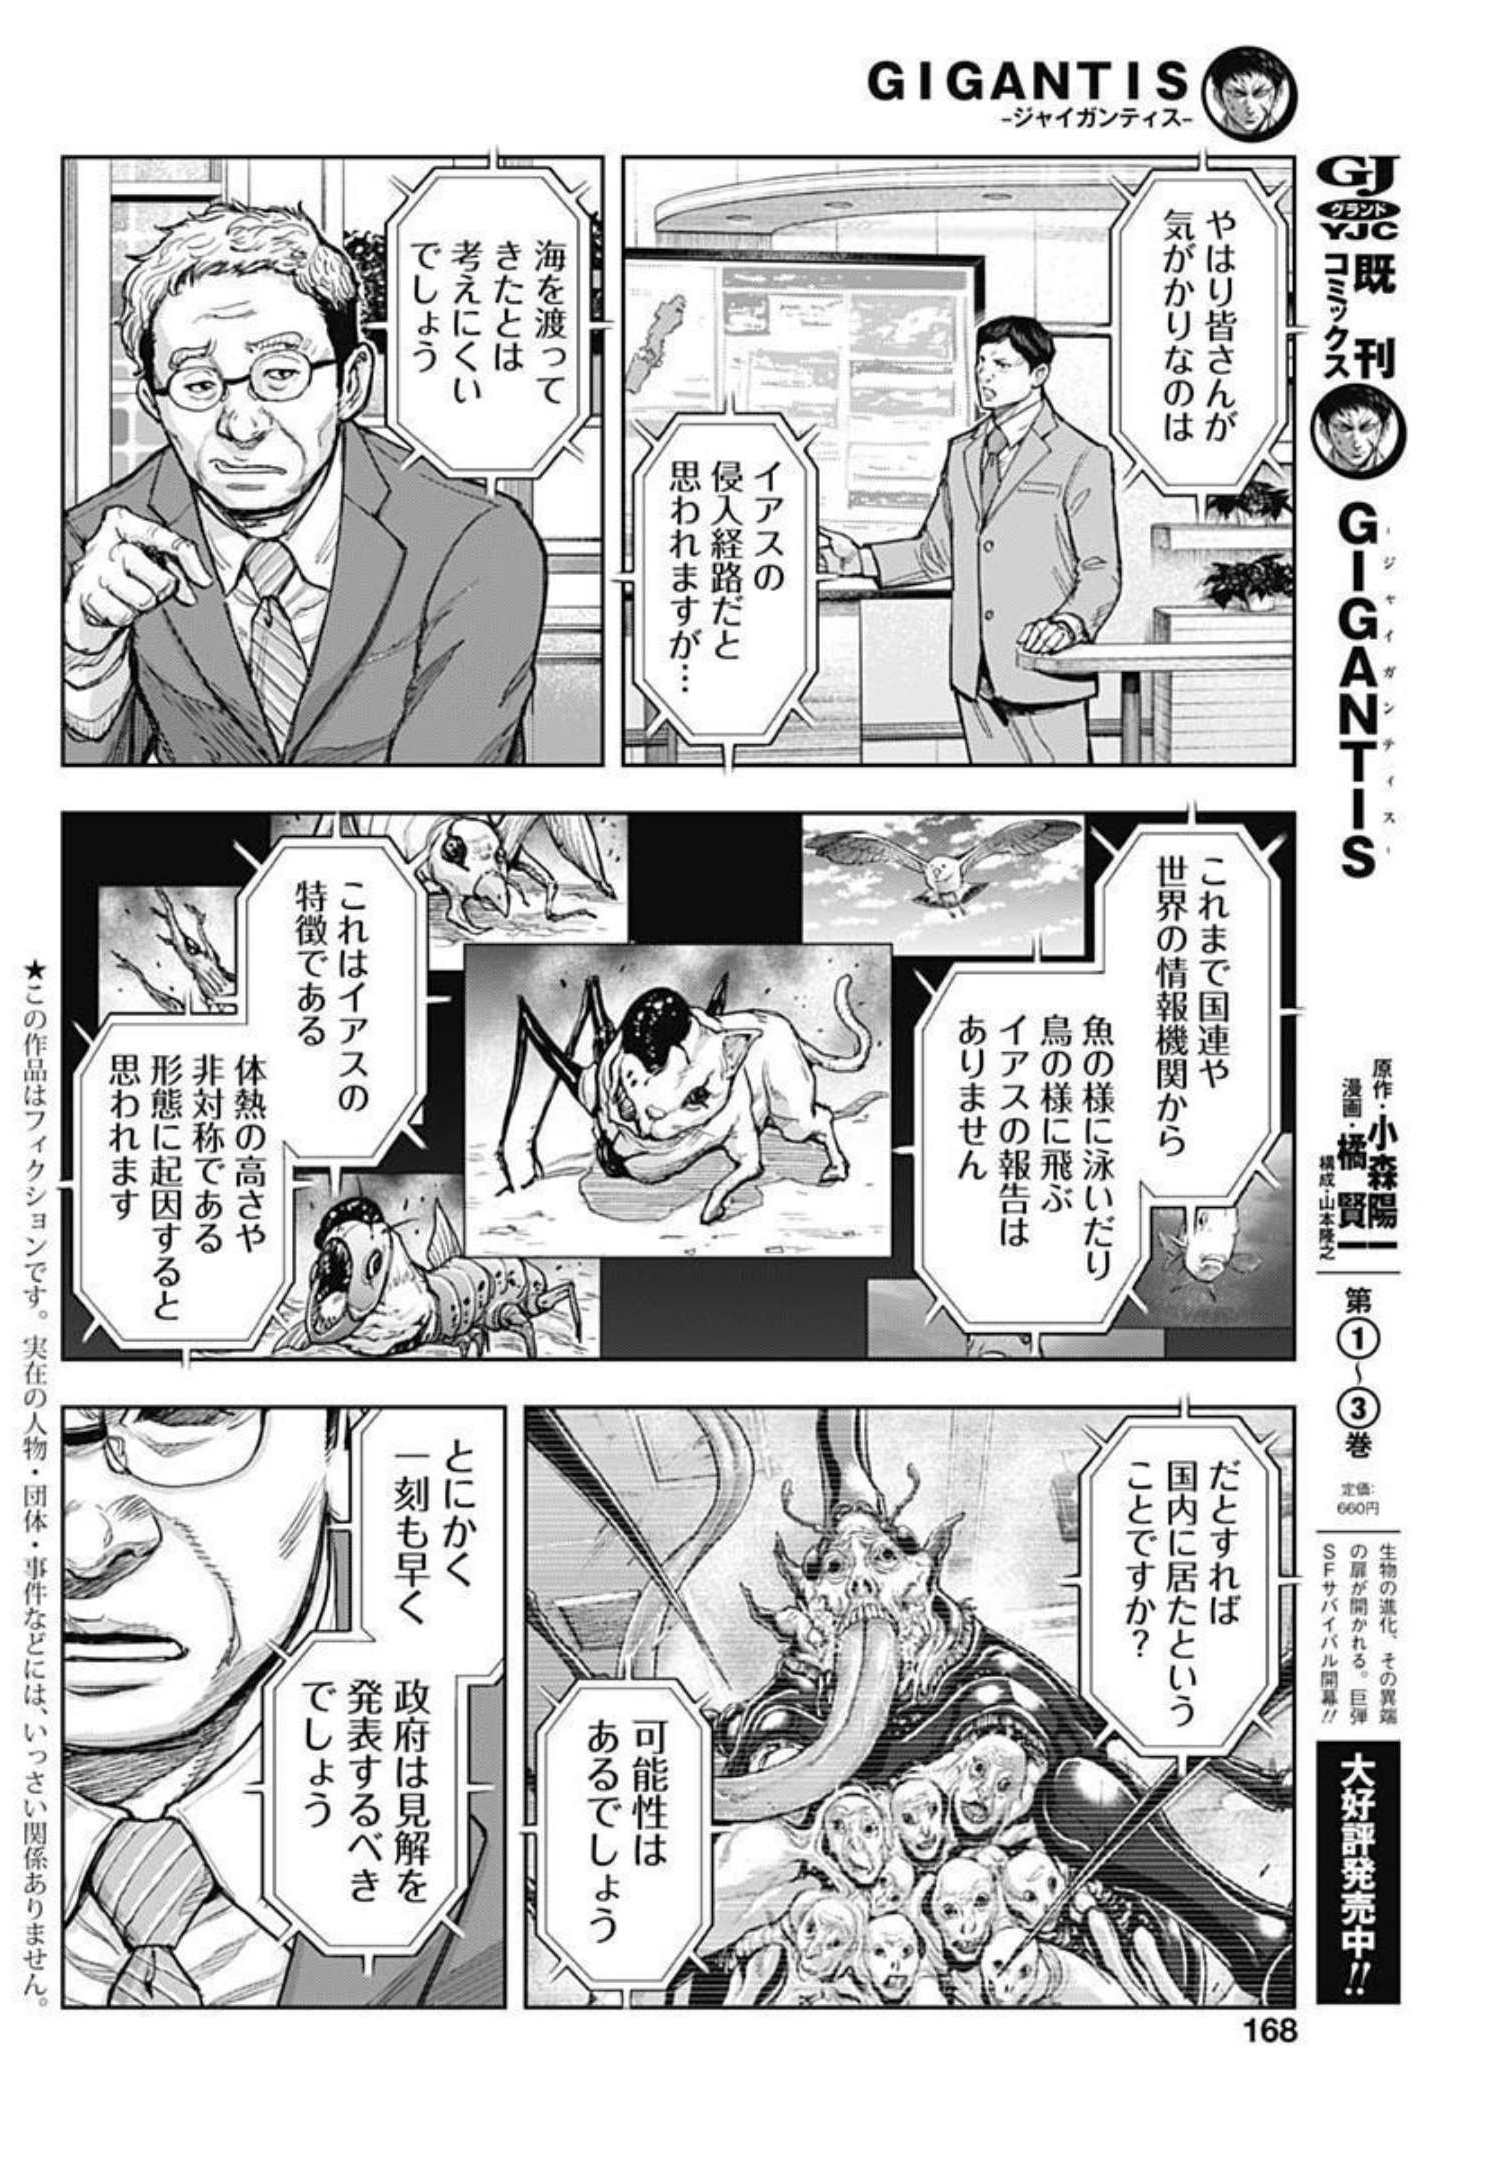 GIGANTISージャイガンティスー 第20話 - Page 4